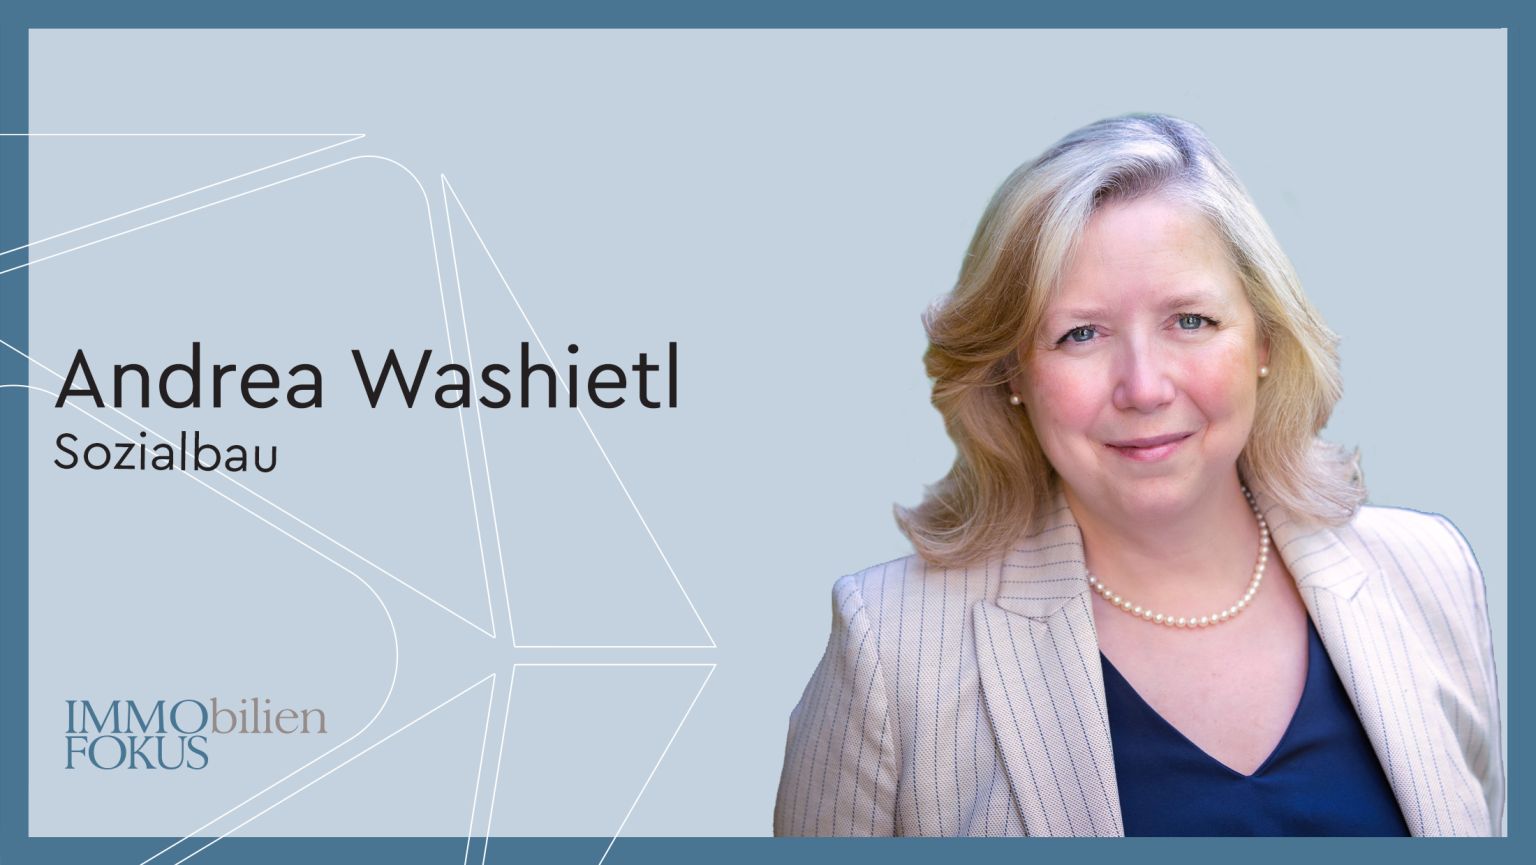 Andrea Washietl ist neues Mitglied des Sozialbau-Vorstandes